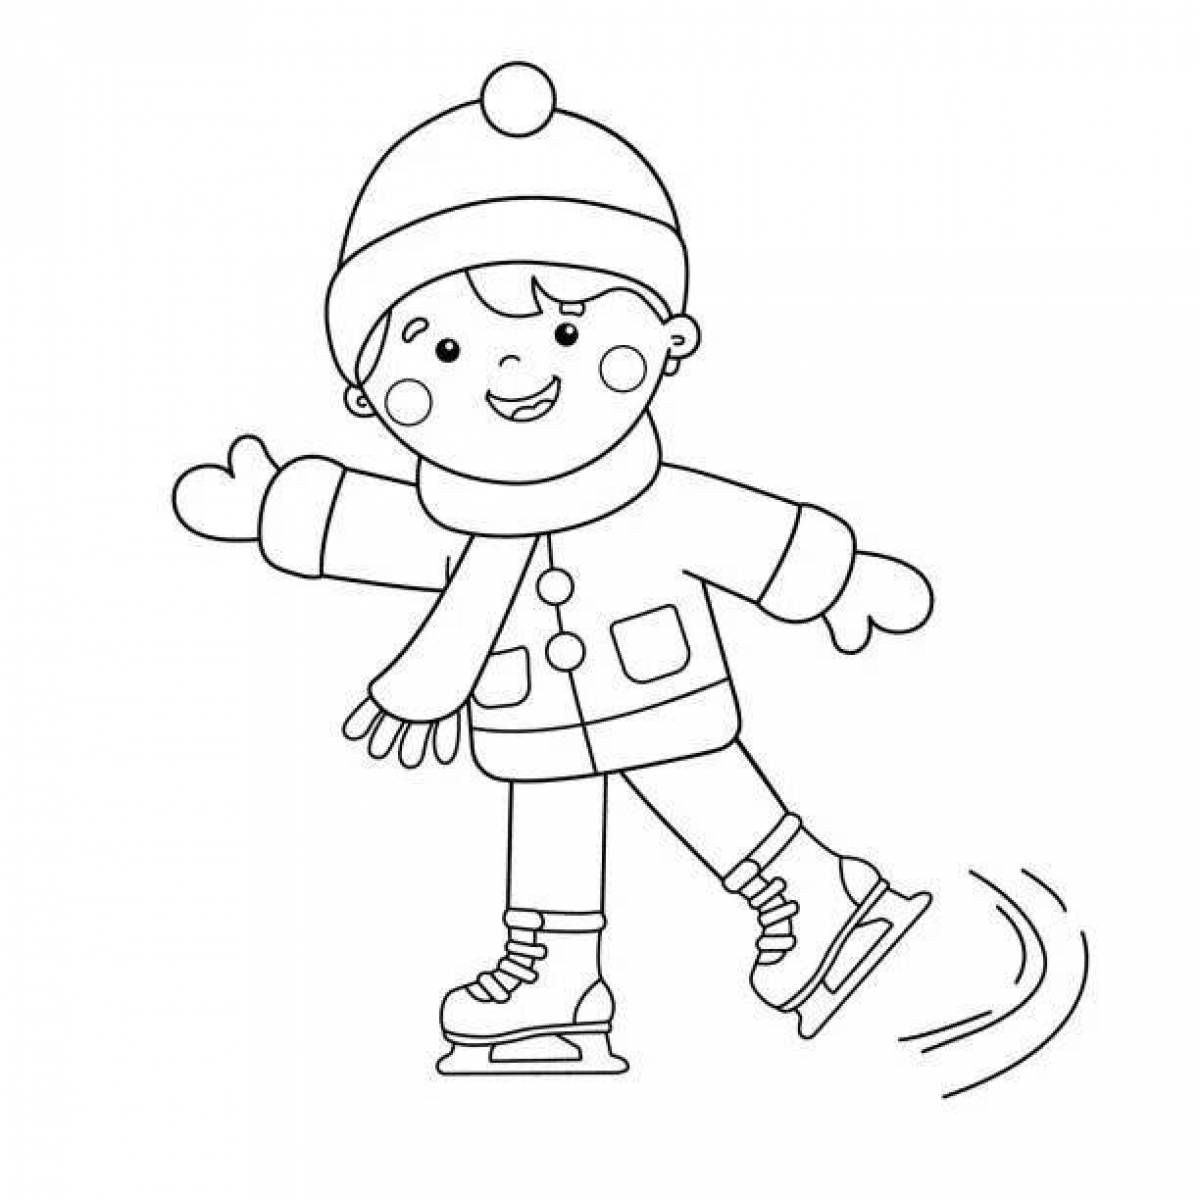 Well-balanced boy on skates